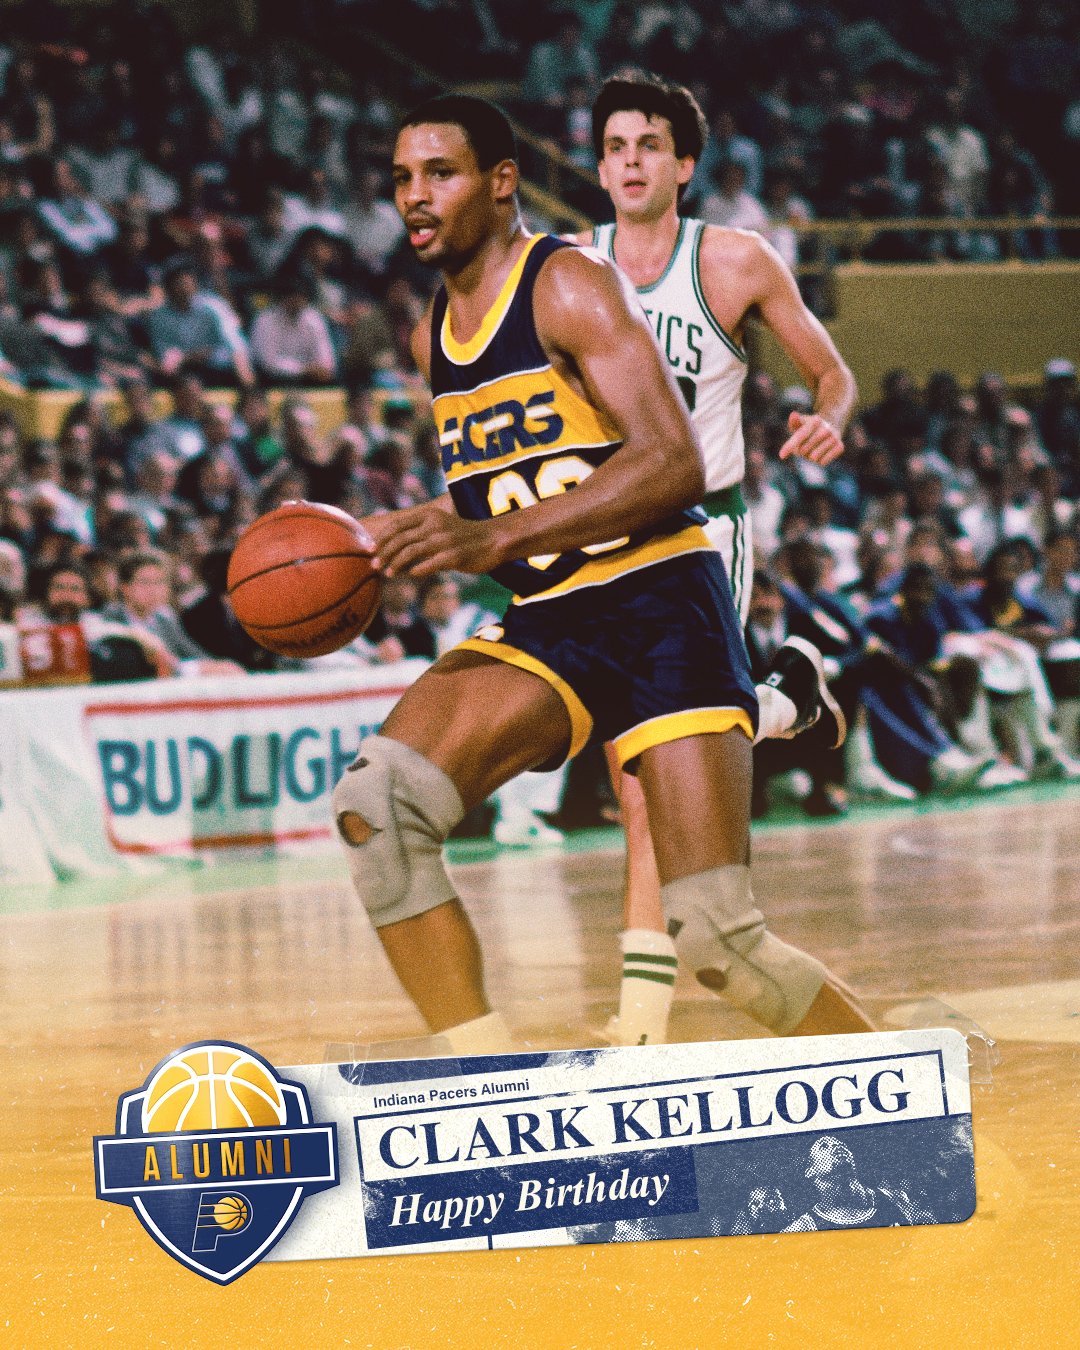 Join us in wishing Clark Kellogg a happy birthday! 